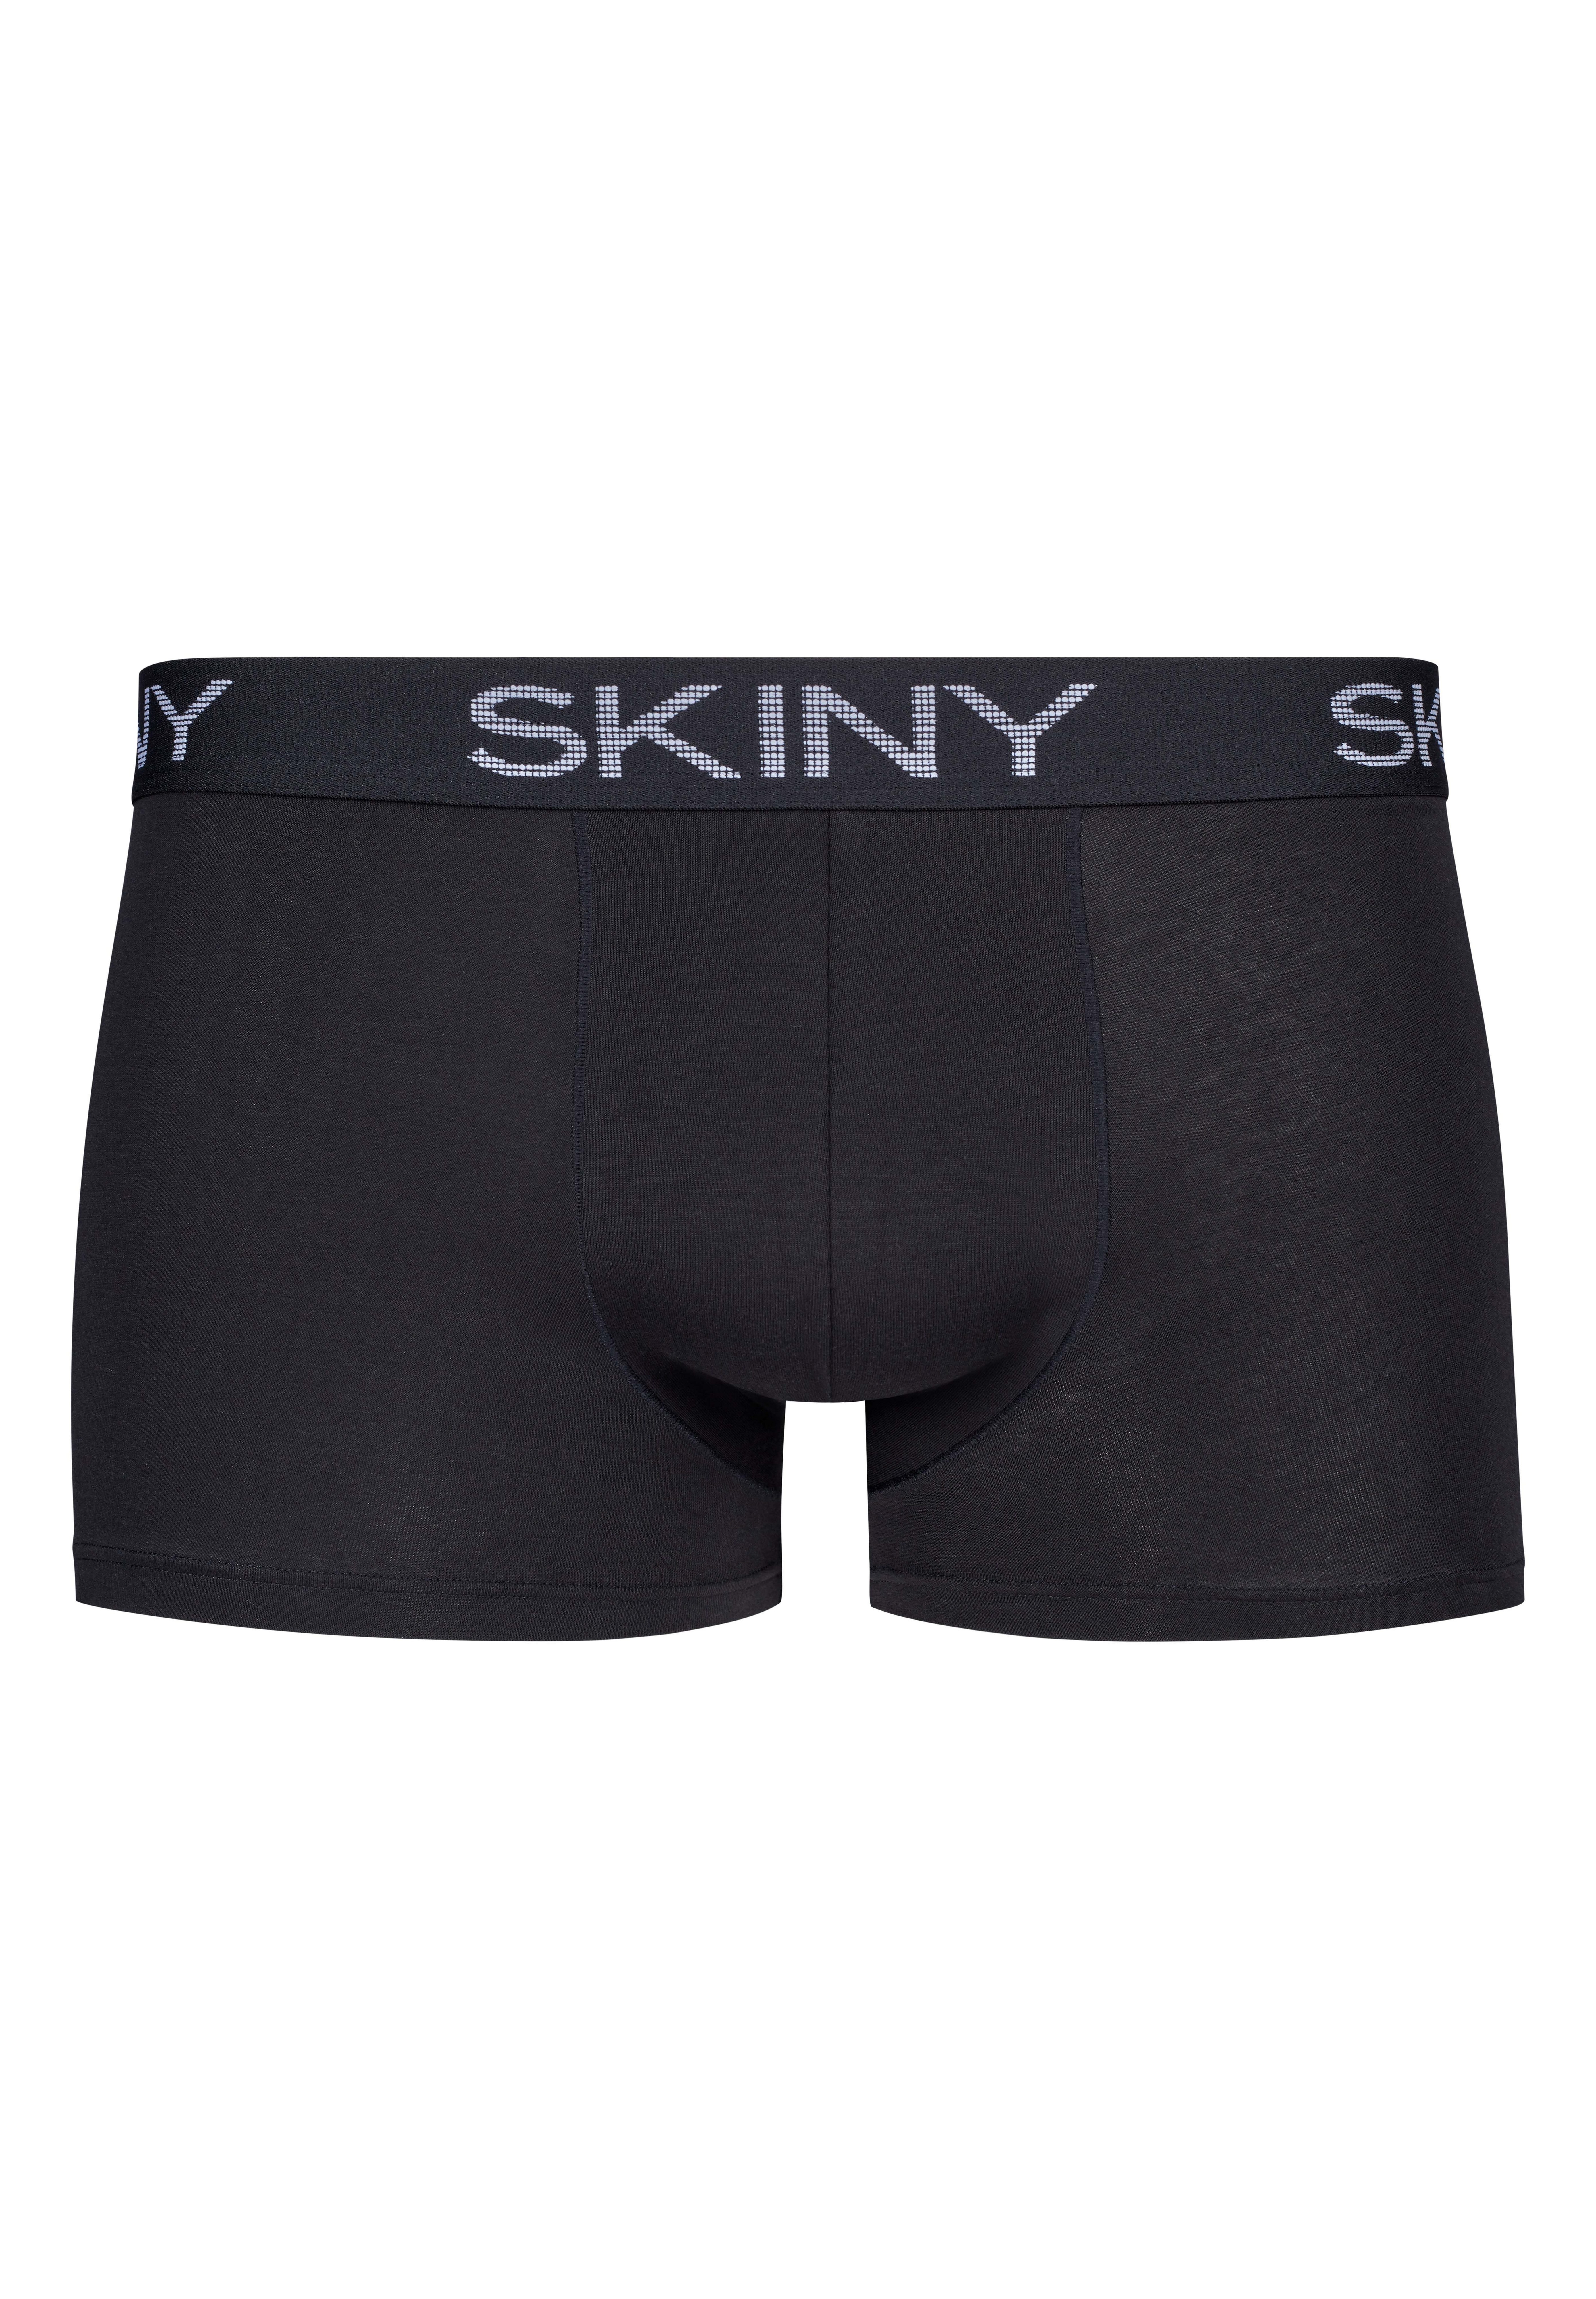 Skiny Retro Pants Doppelpack Boxershorts schwarz/weiß schwarz | (2-St) Doppelpack Herren